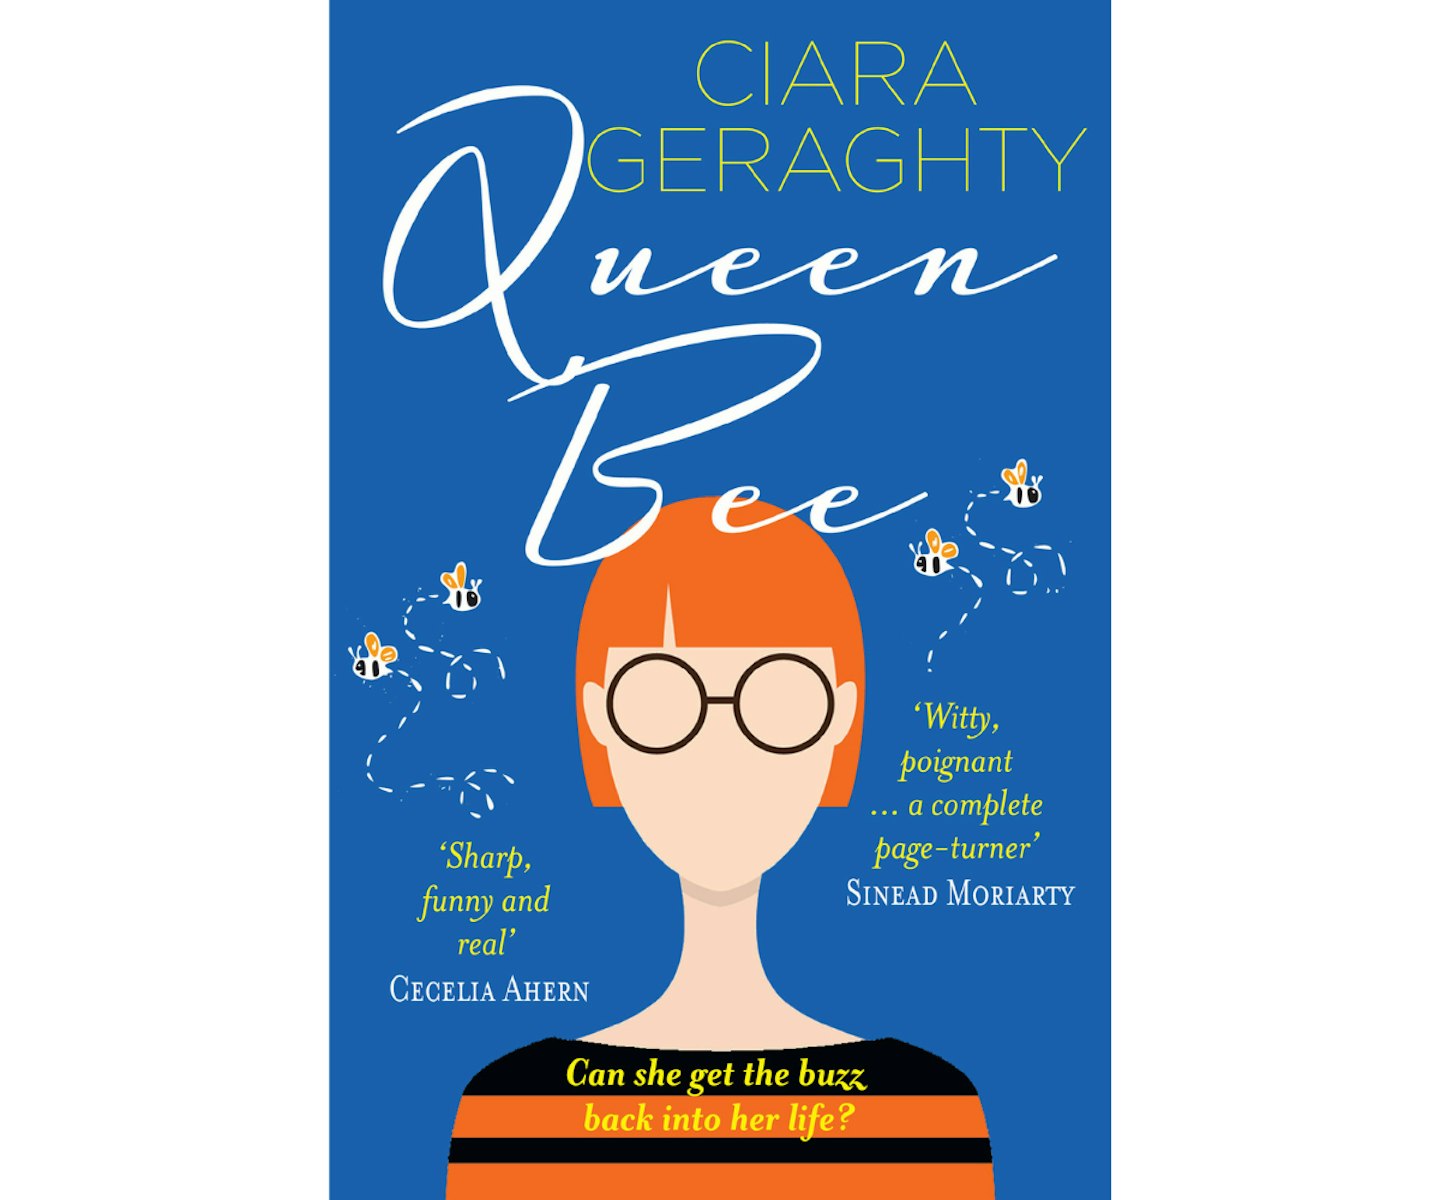 Queen Bee by Ciara Geraghty